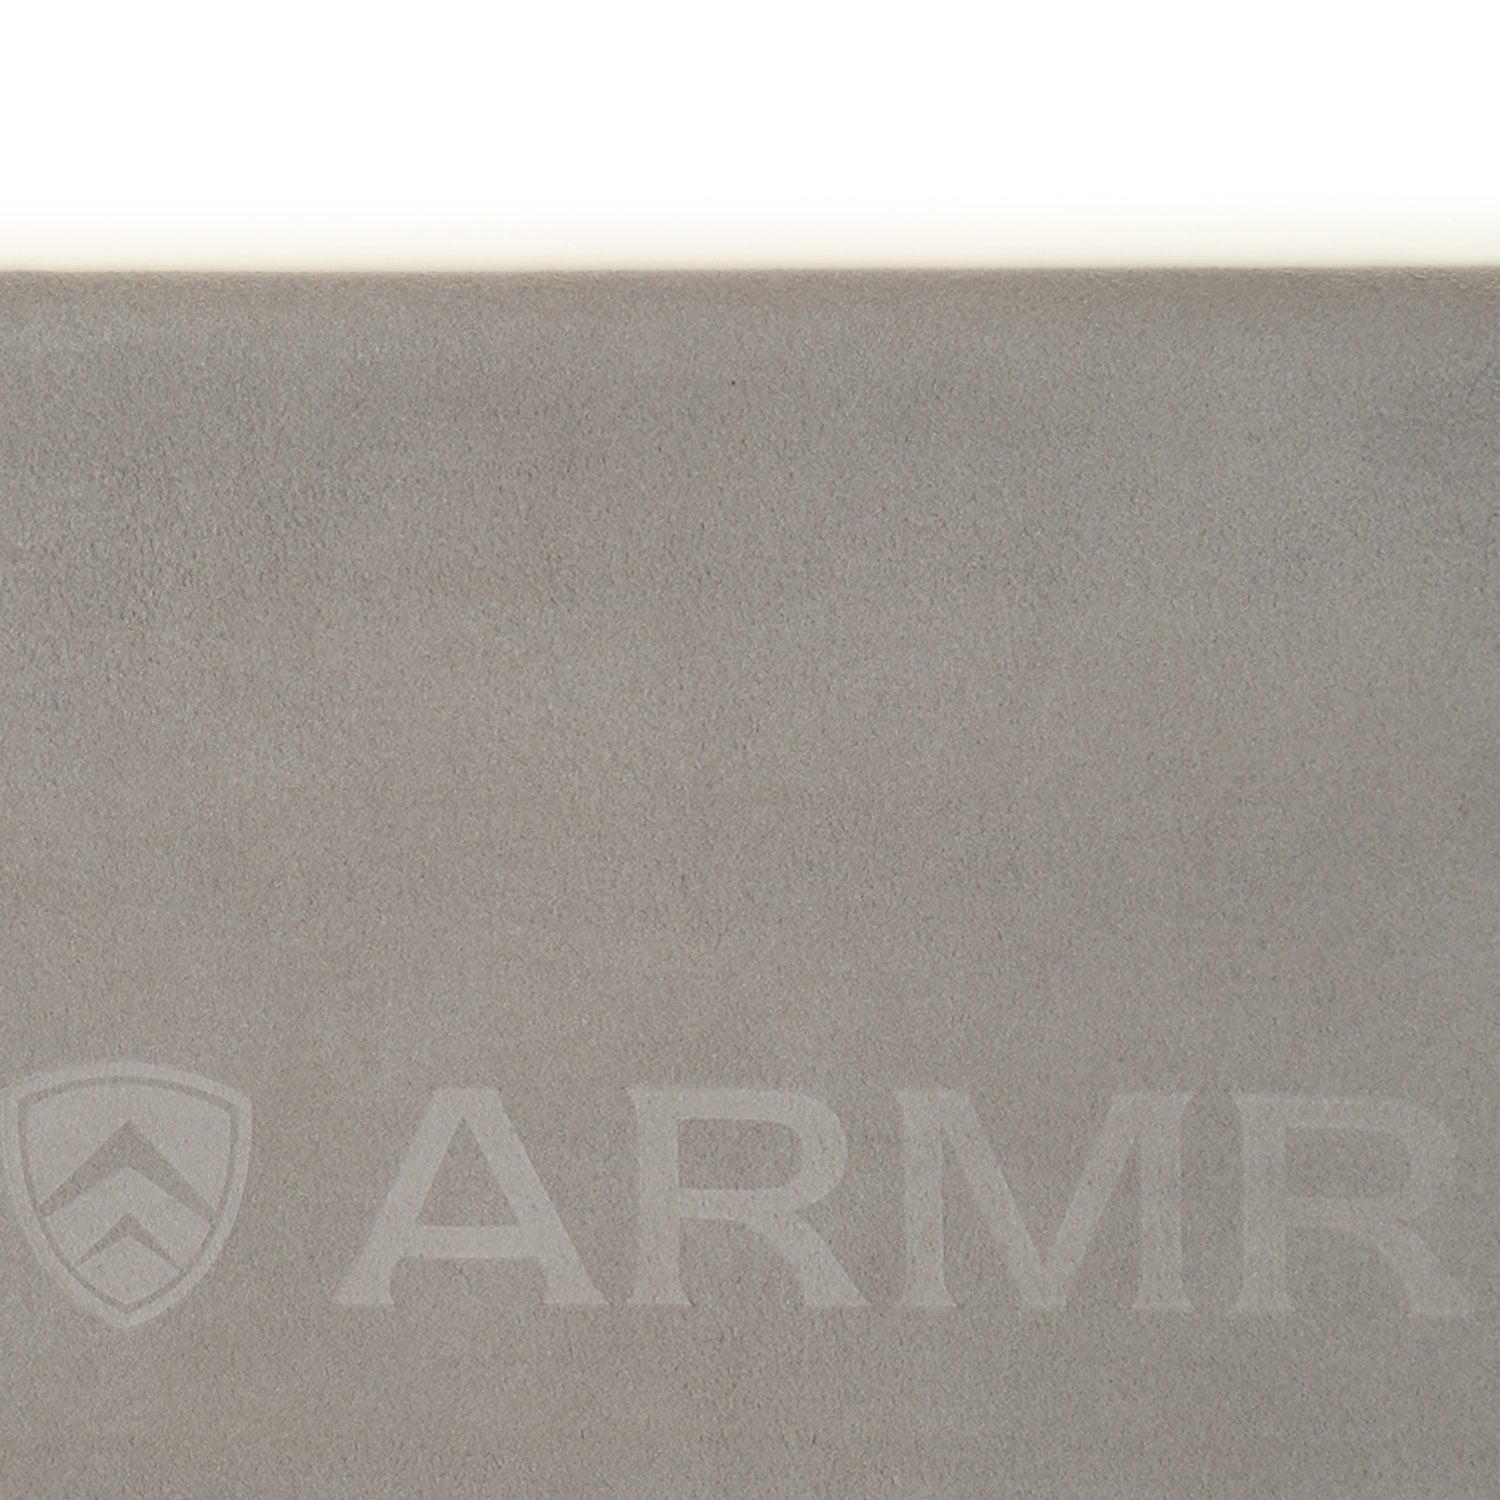 ARMR Unisex GREY SPORT Quickdry TOWEL